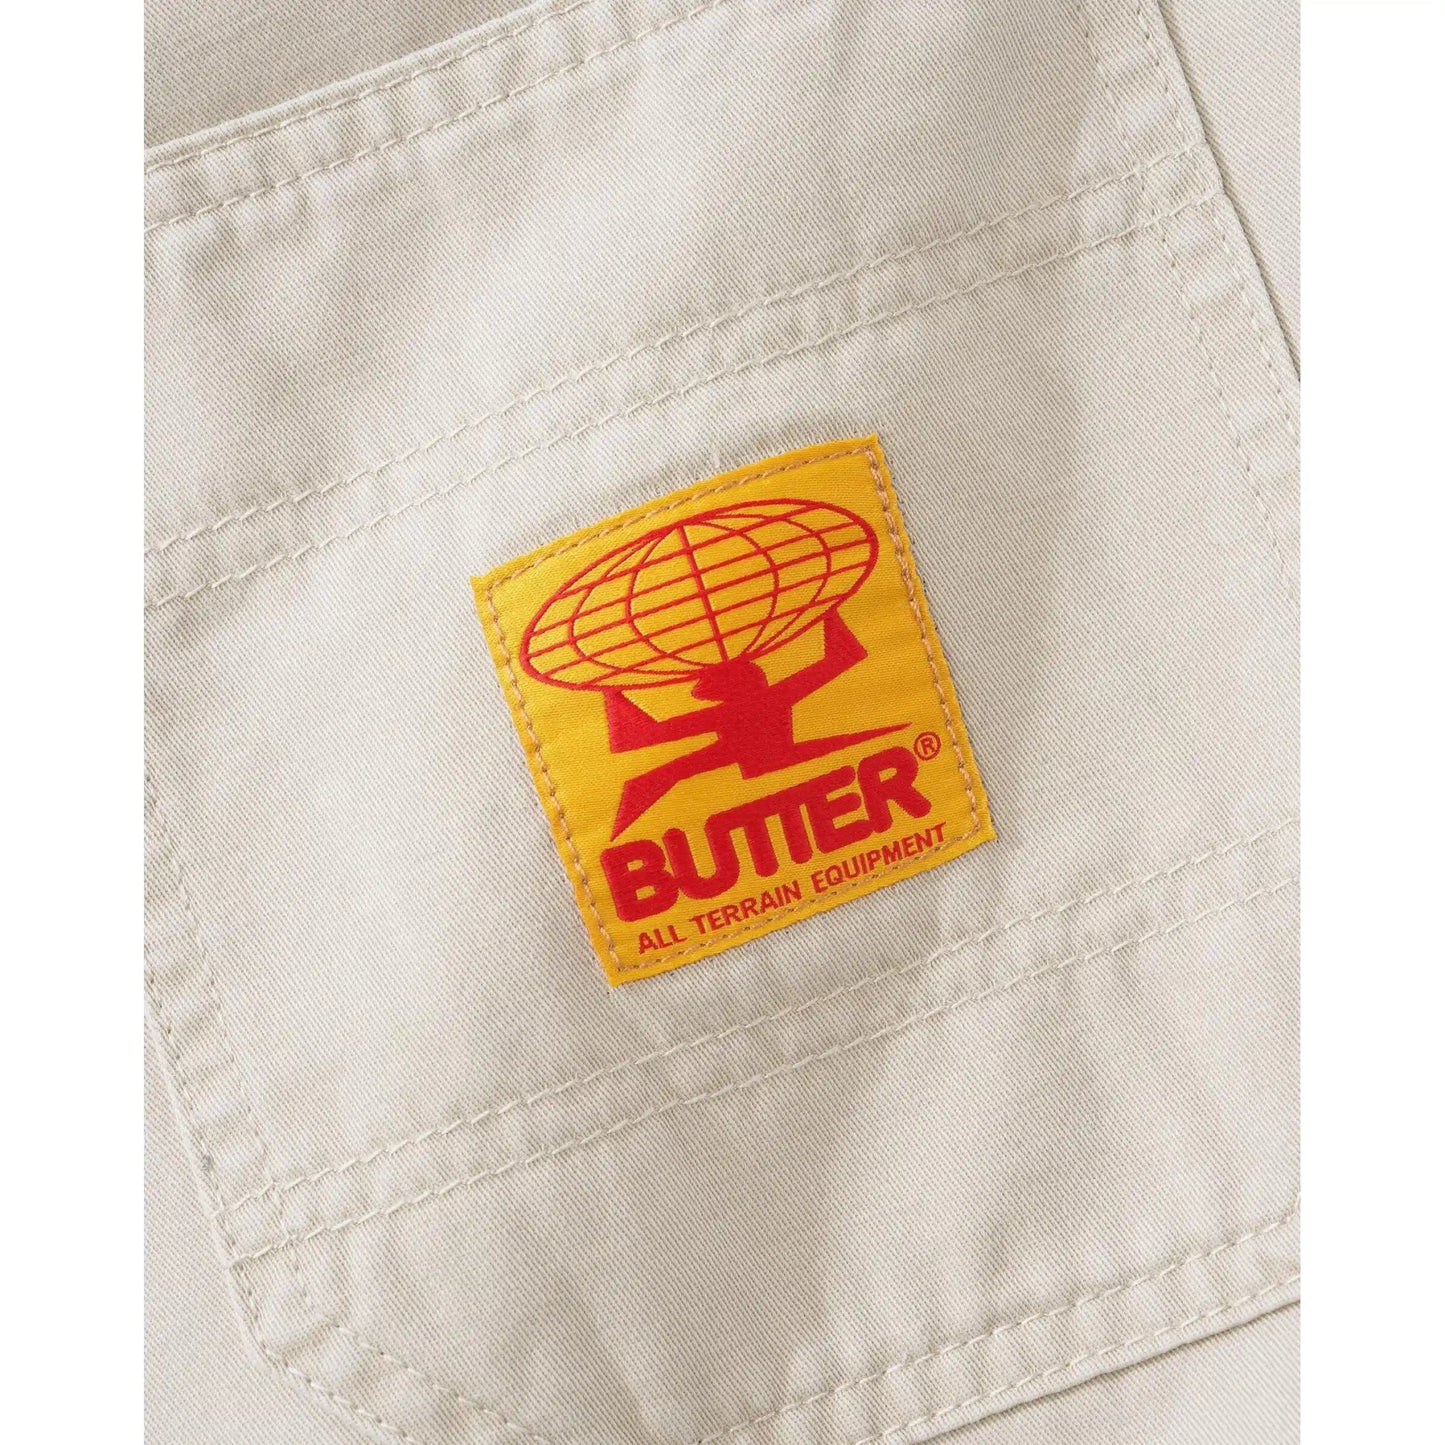 Butter Goods Field Cargo Pants, khaki - Tiki Room Skateboards - 3